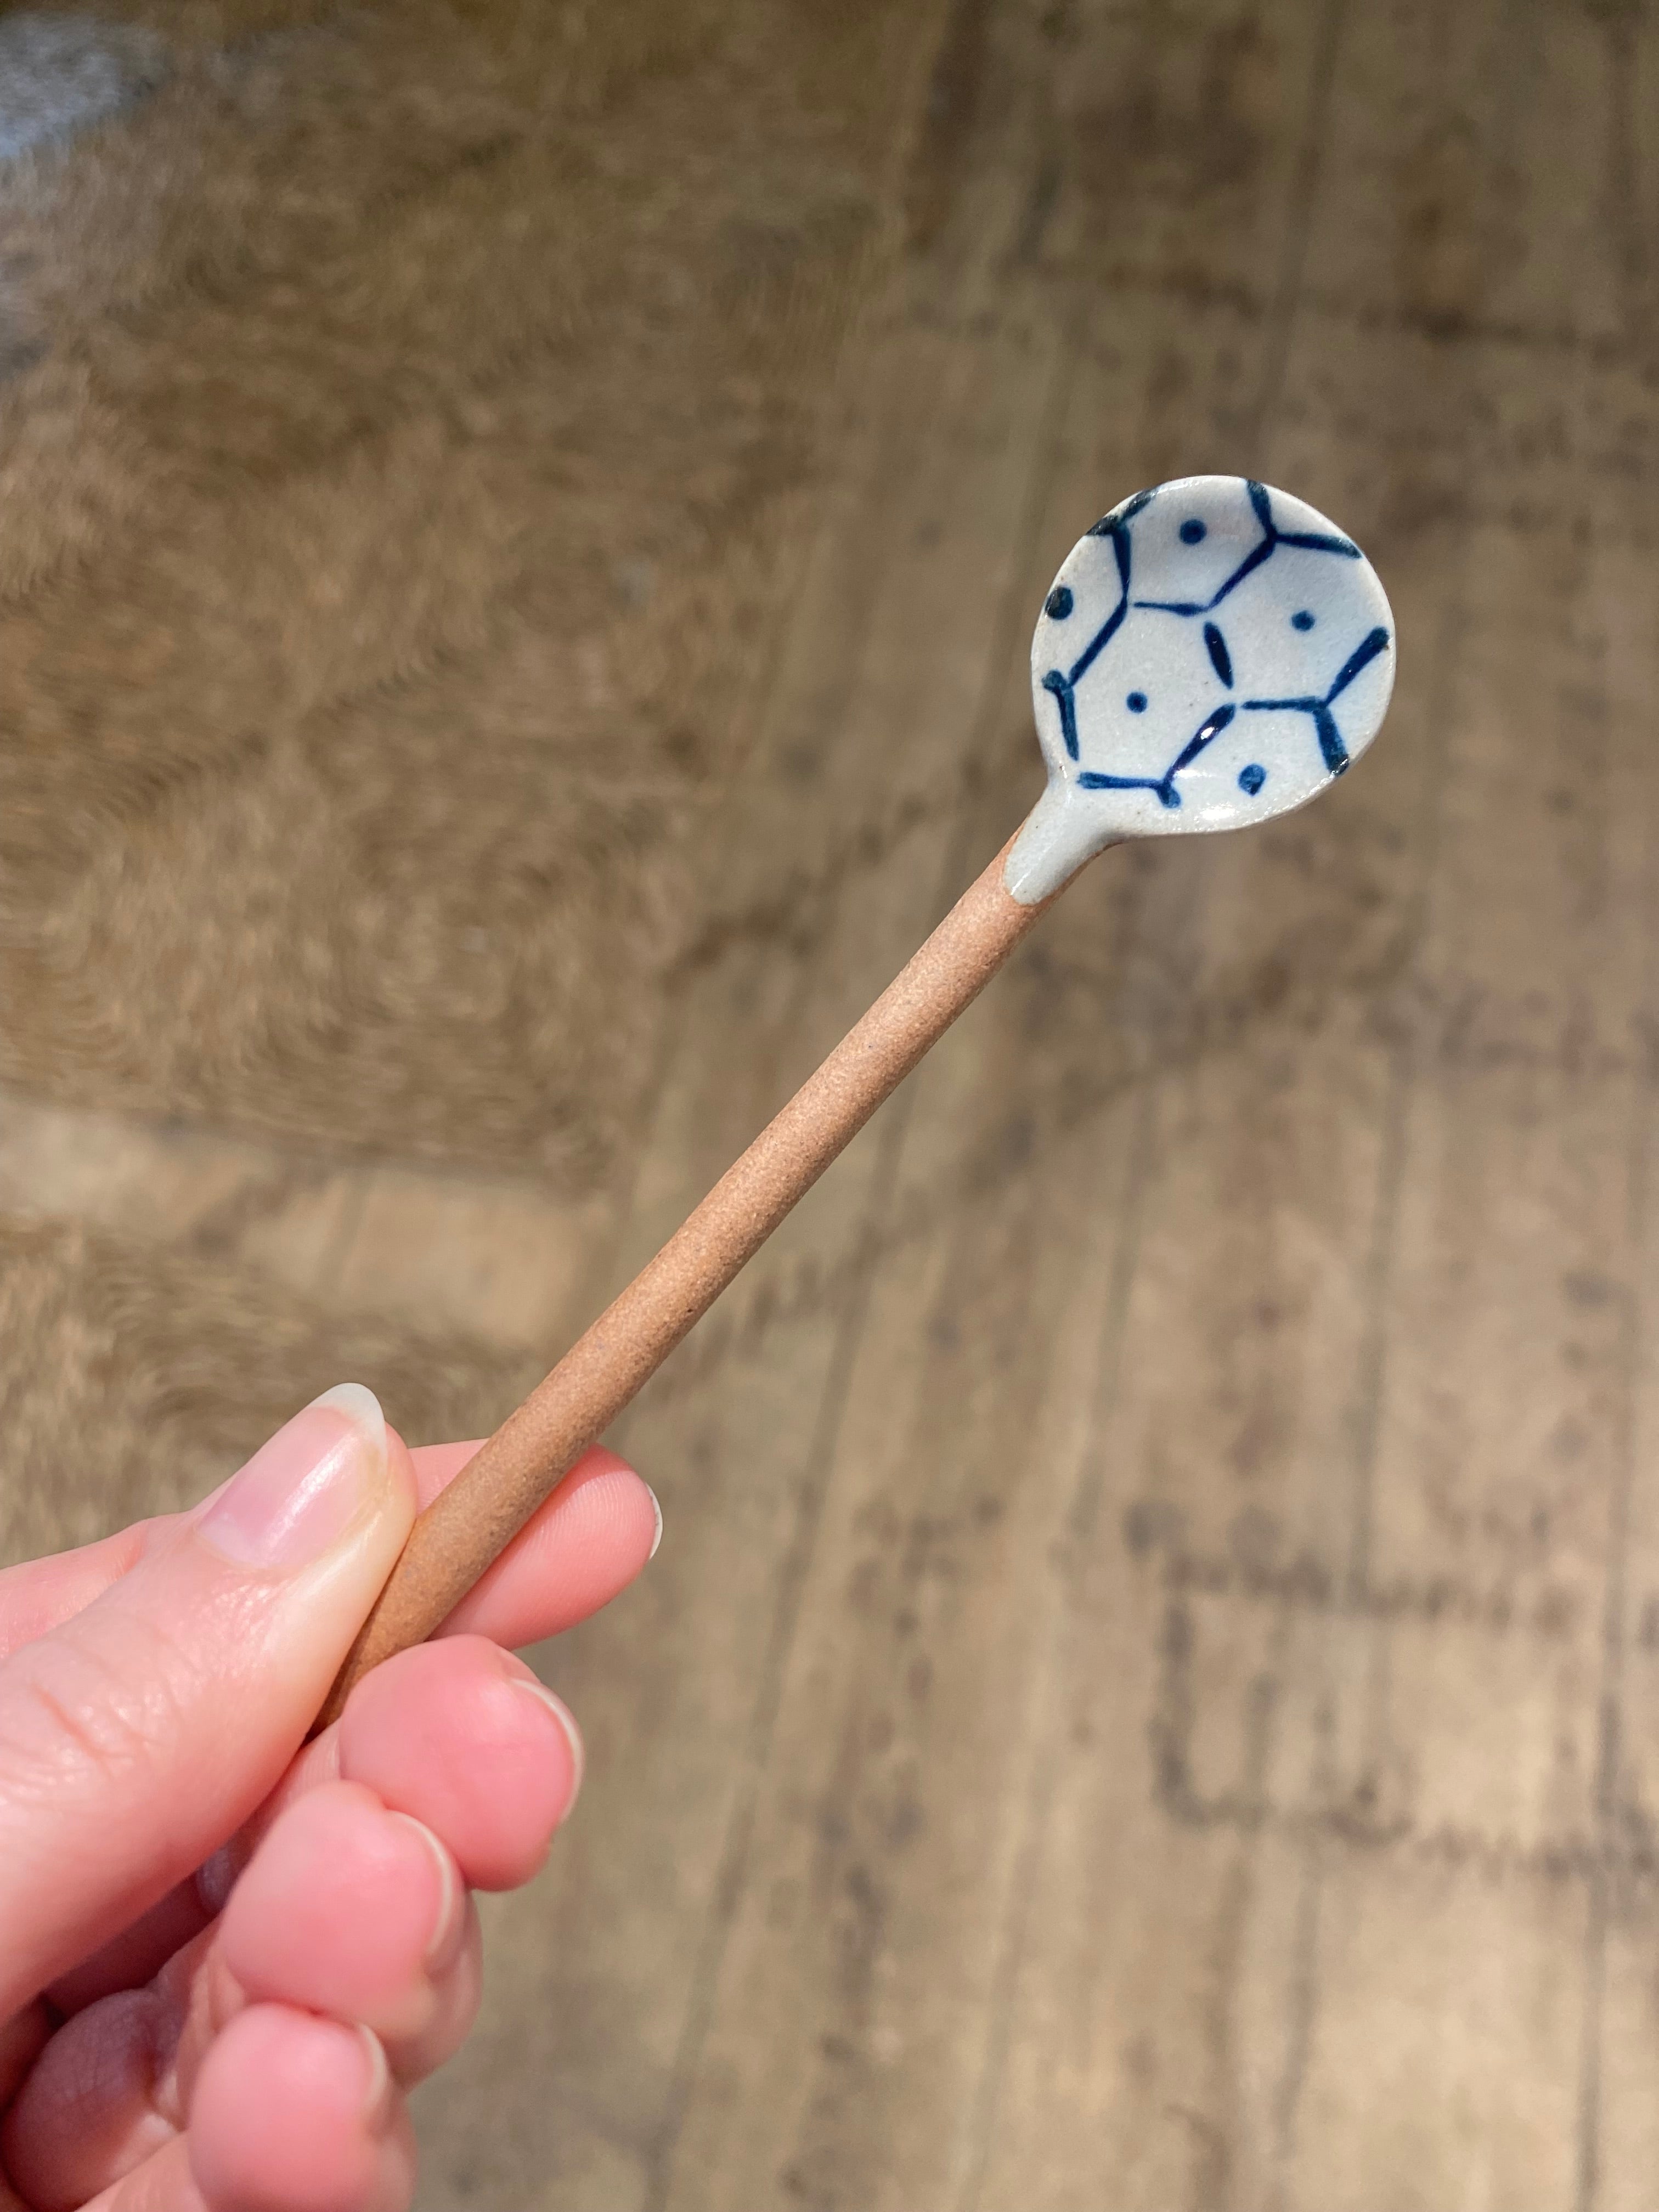 Ceramic spoon with blue motif